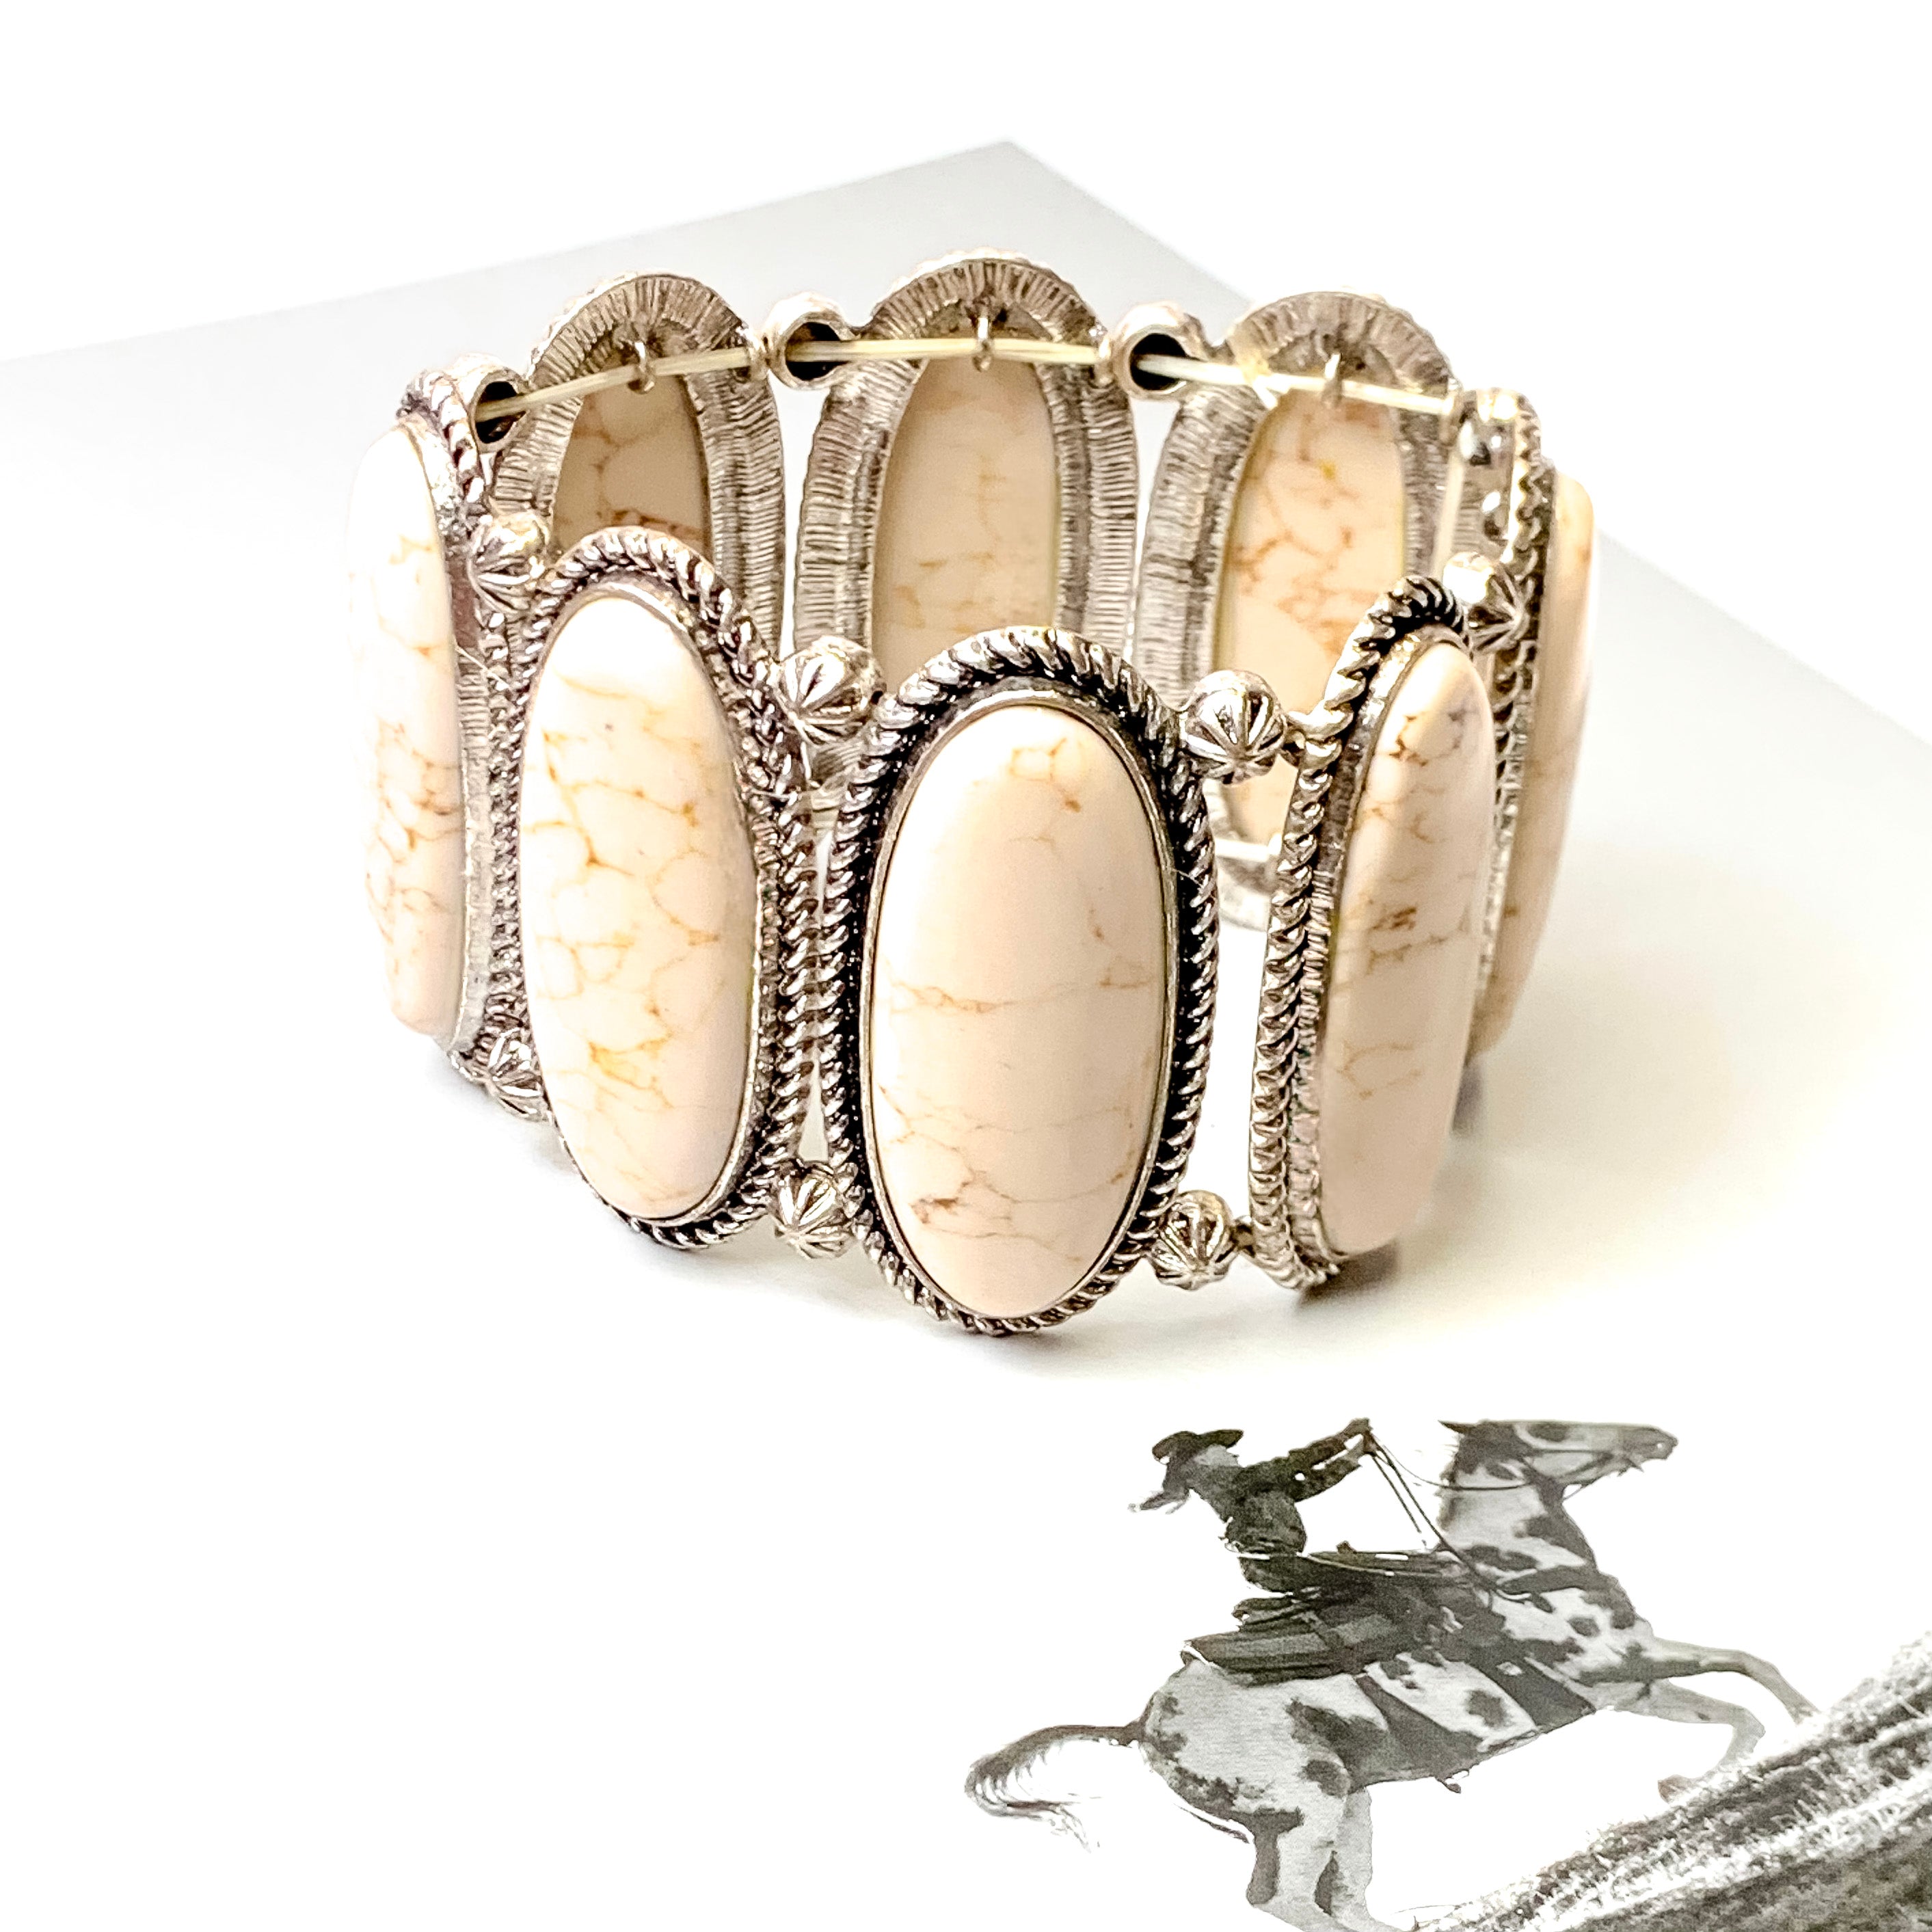 Oval Pendant Stretchy Bracelet in Ivory - Giddy Up Glamour Boutique